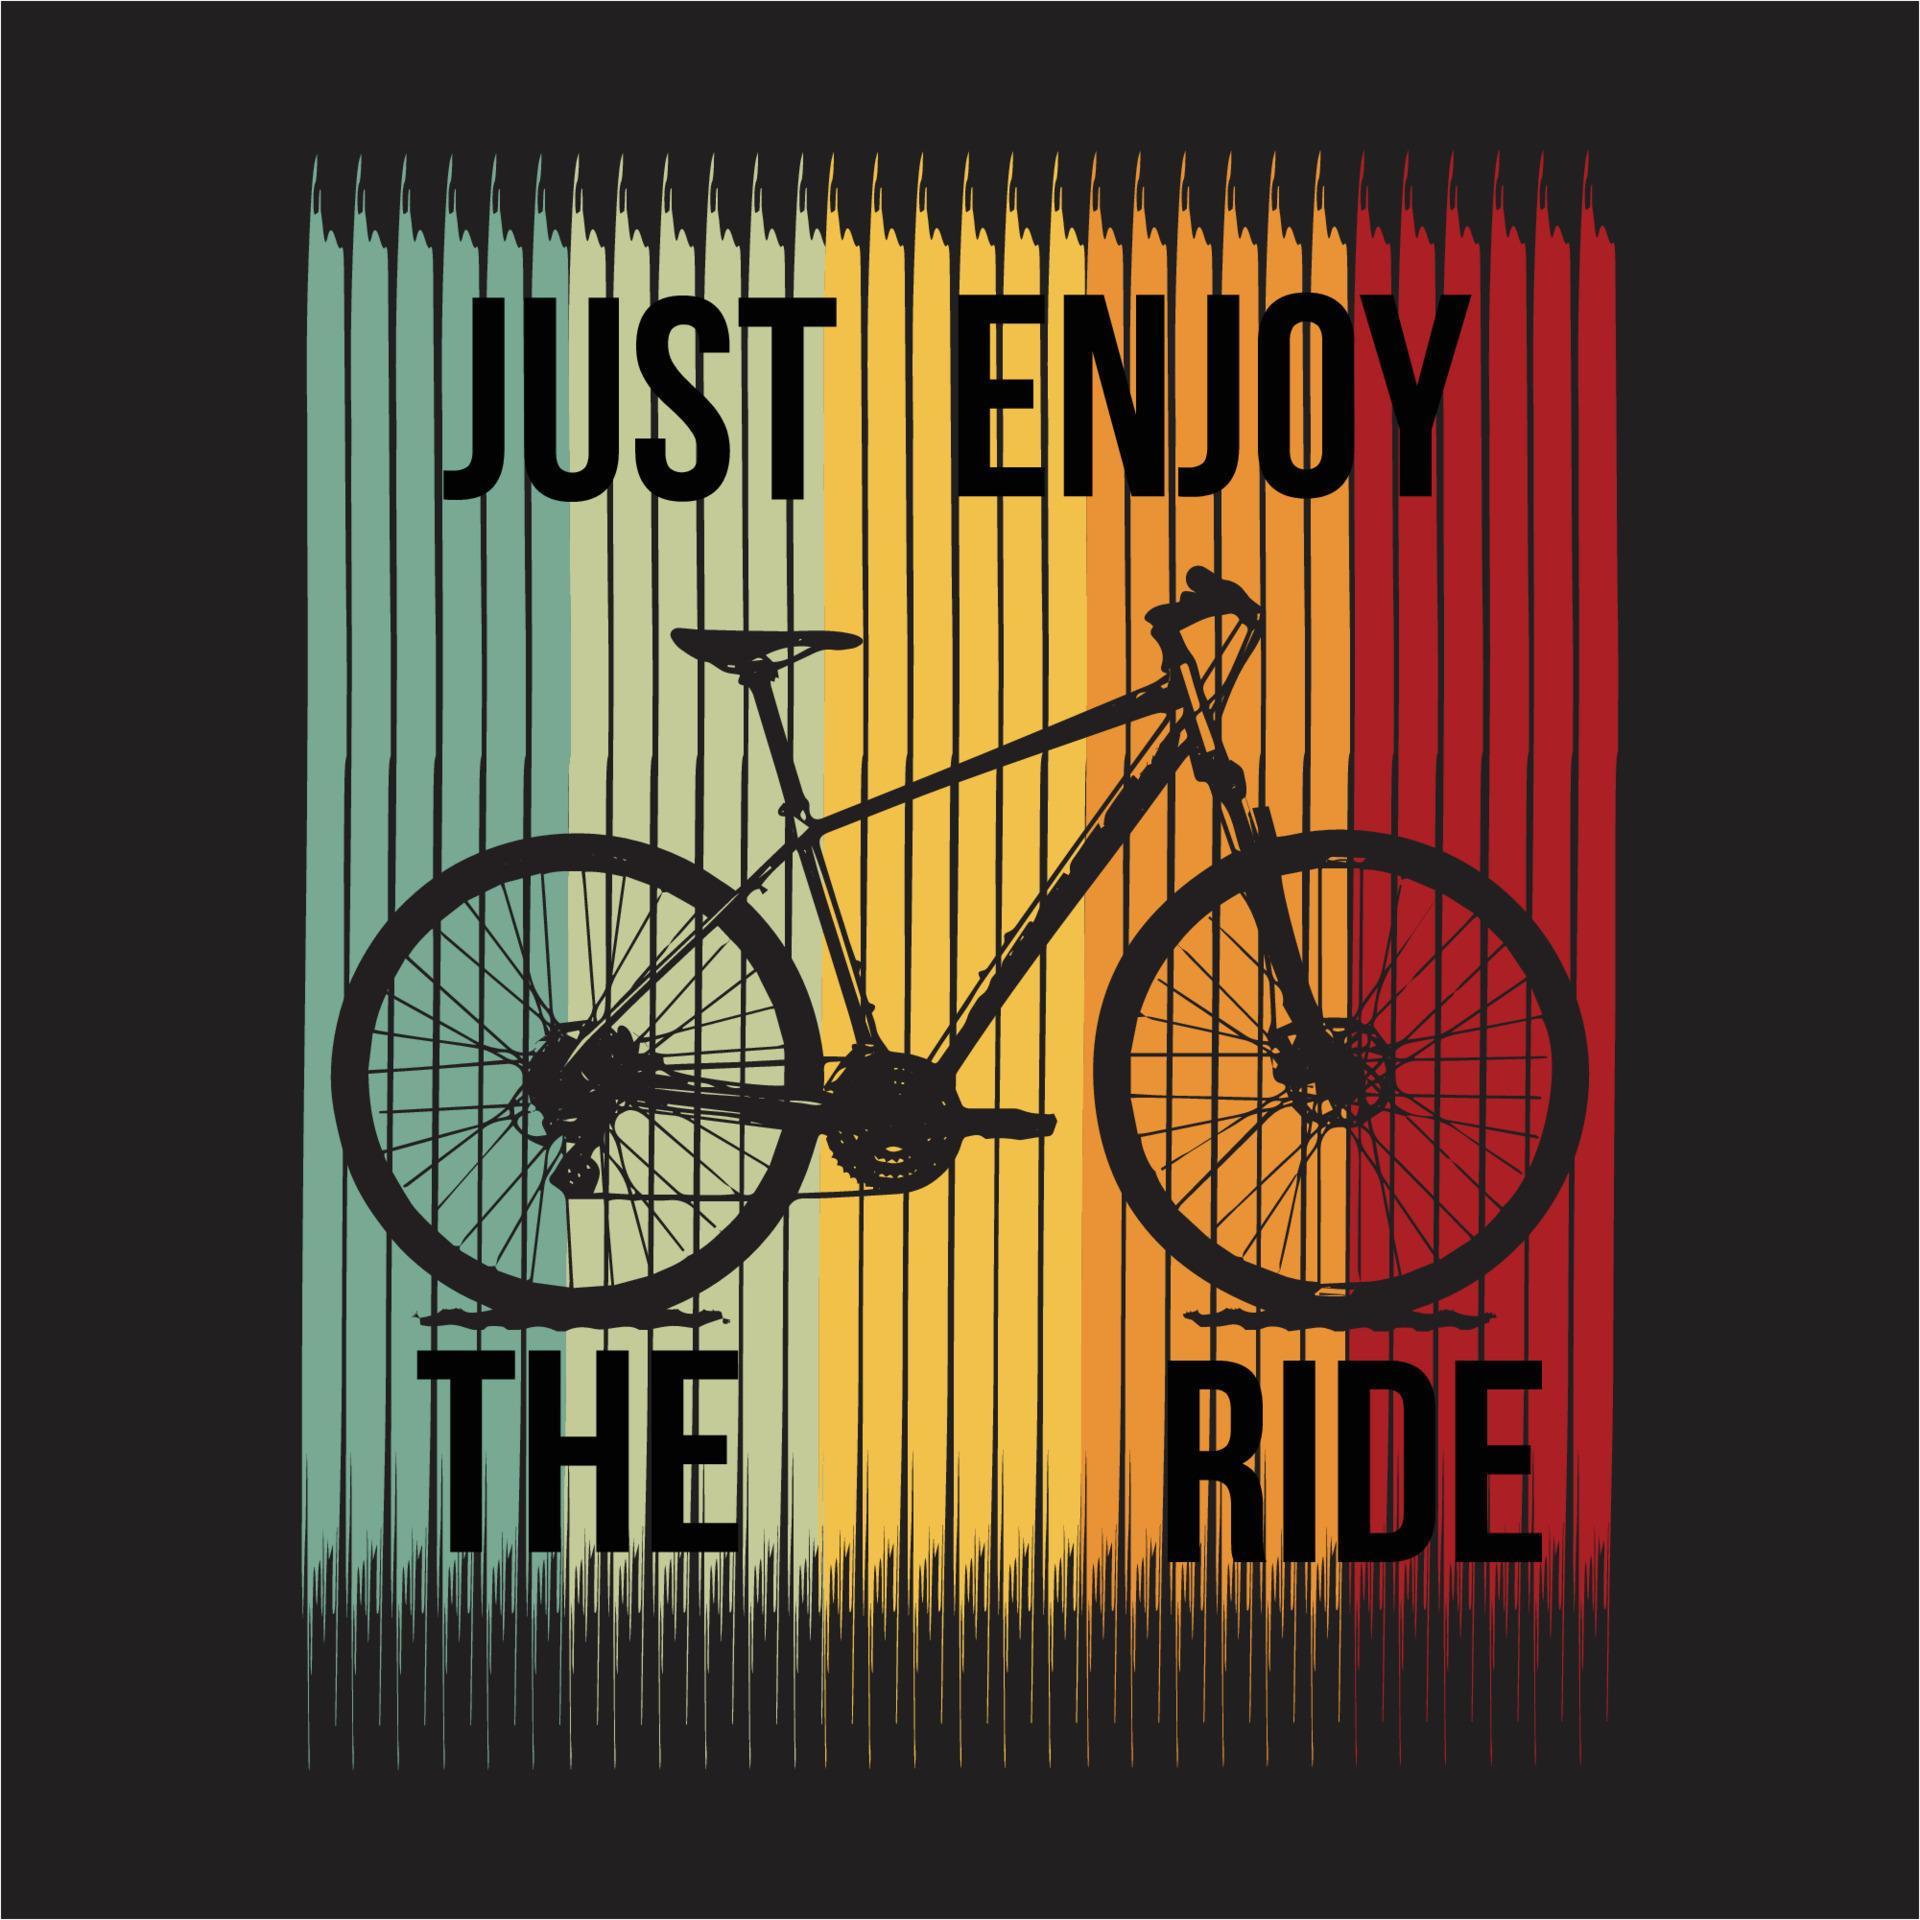 Just enjoy the ride TShirt Design 4190412 Vector Art at Vecteezy